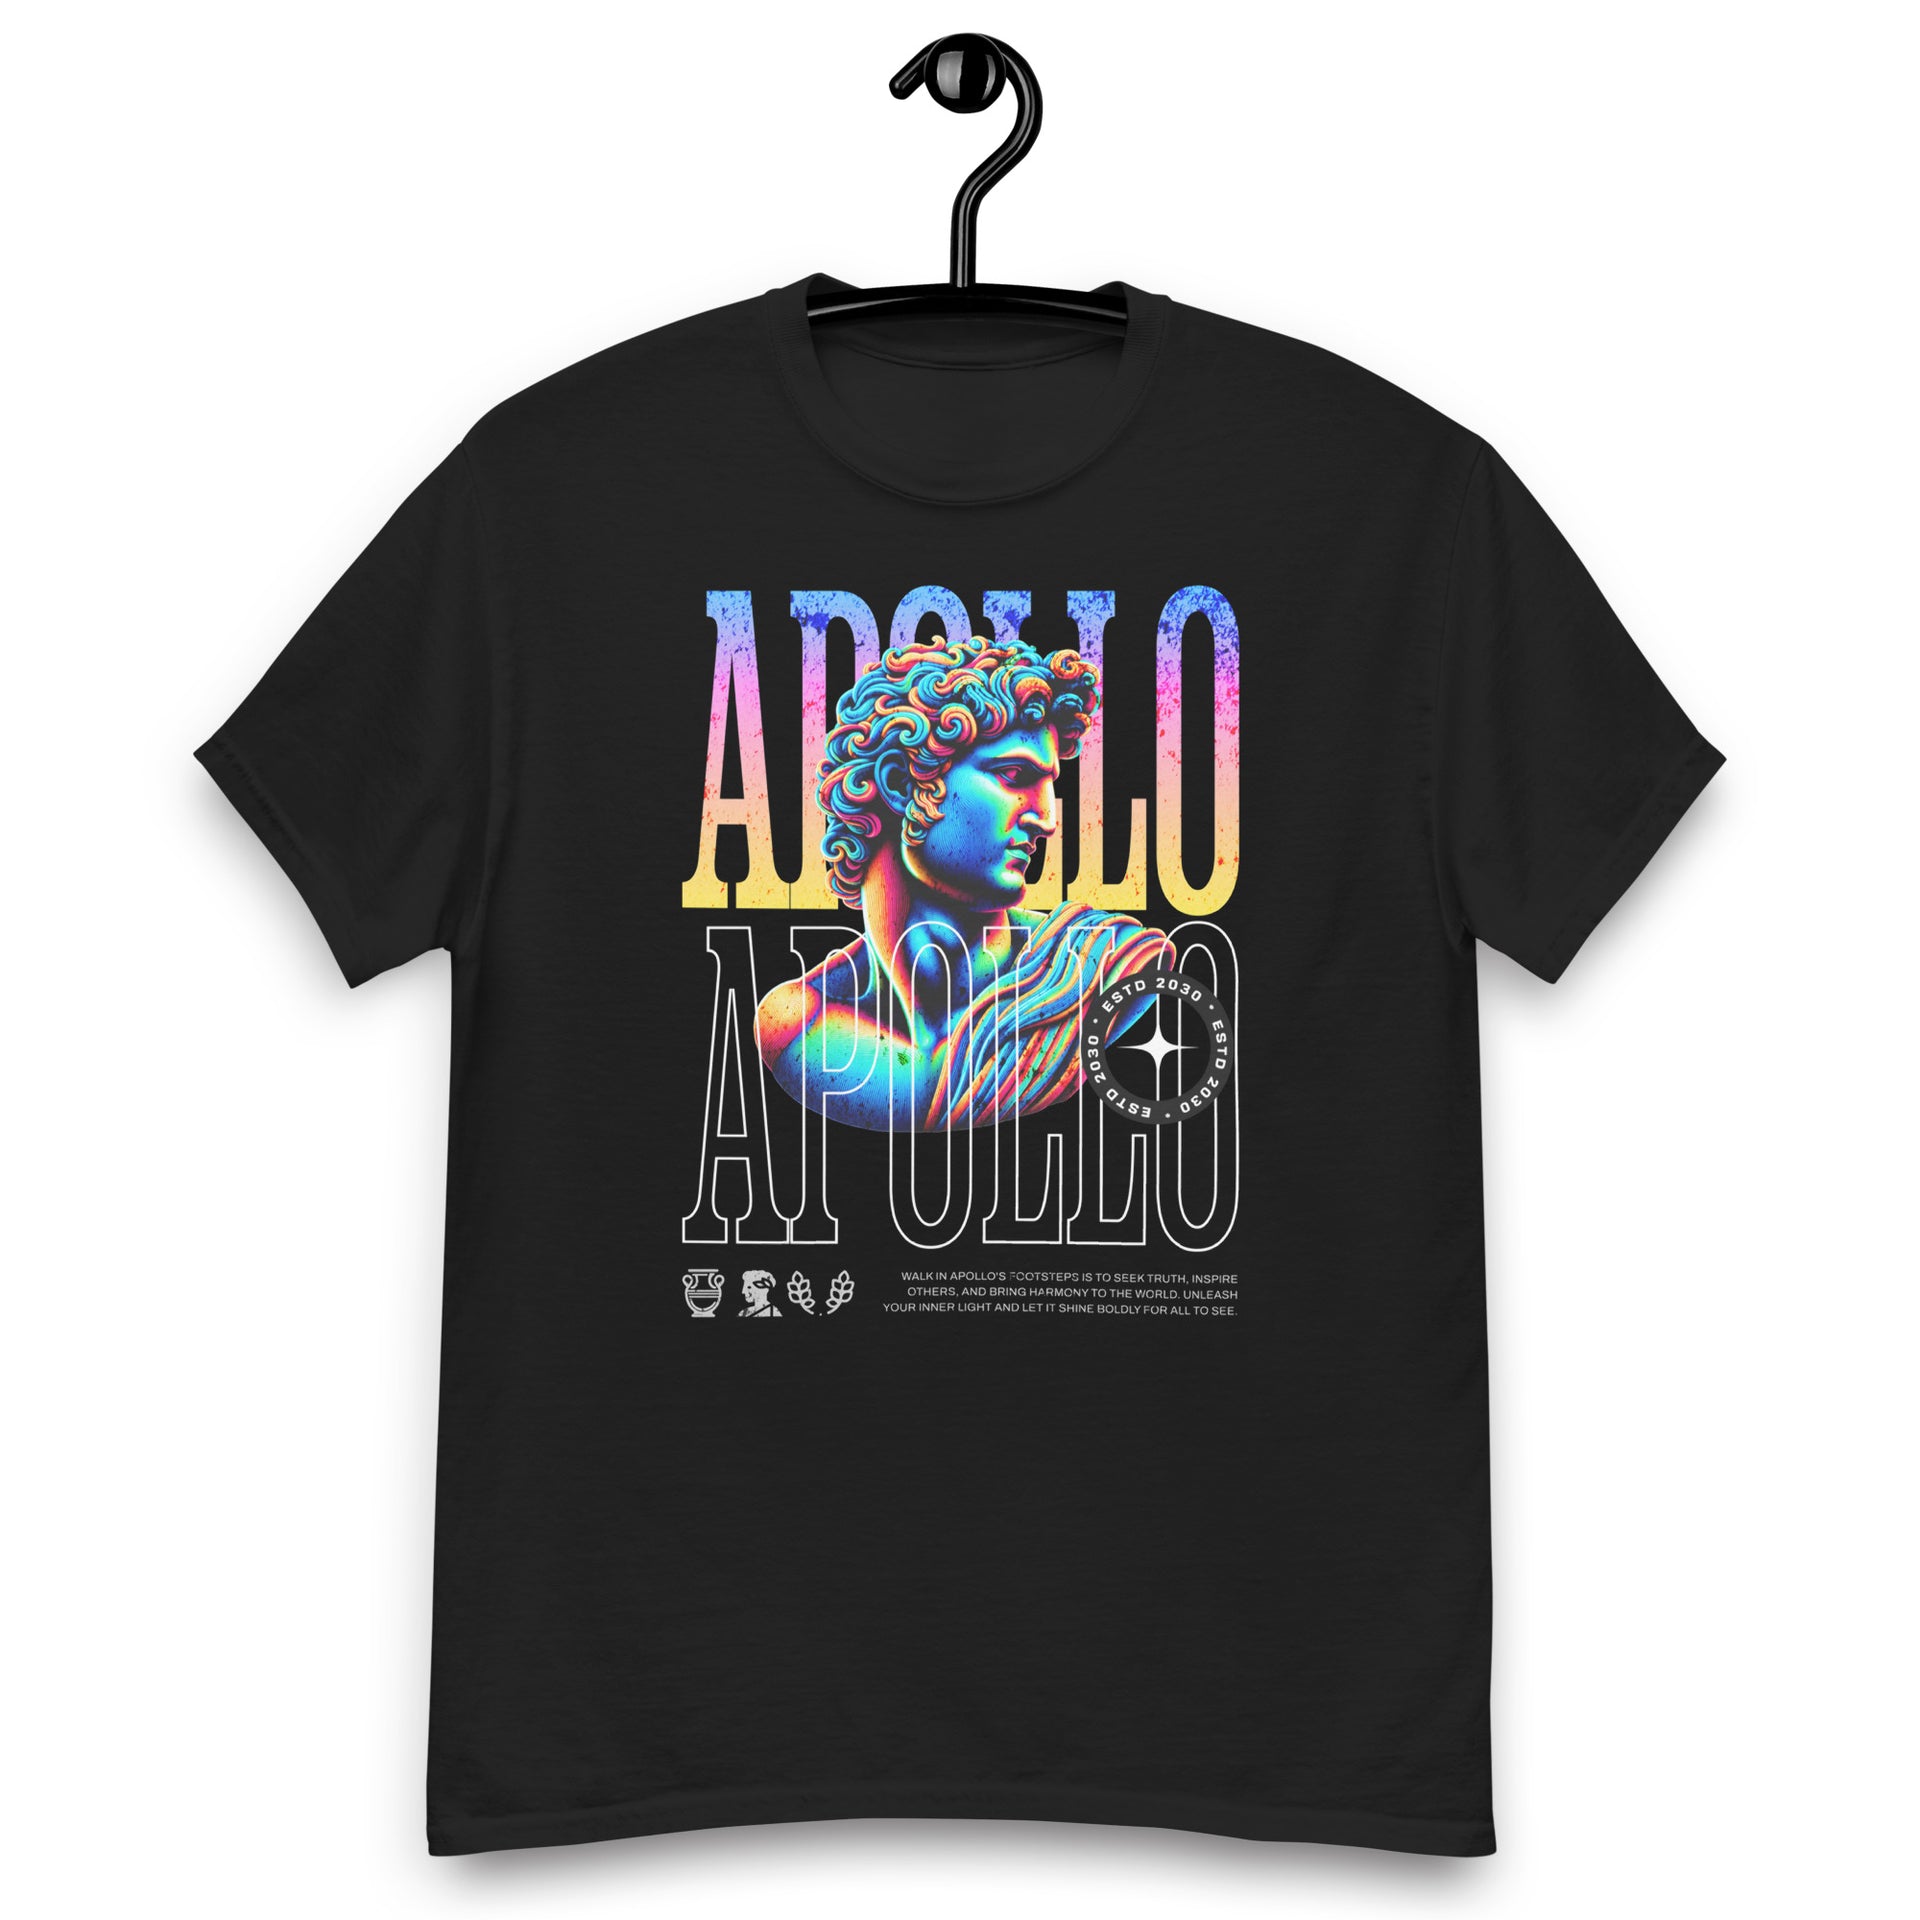 Neon Apollo Men's T-Shirt